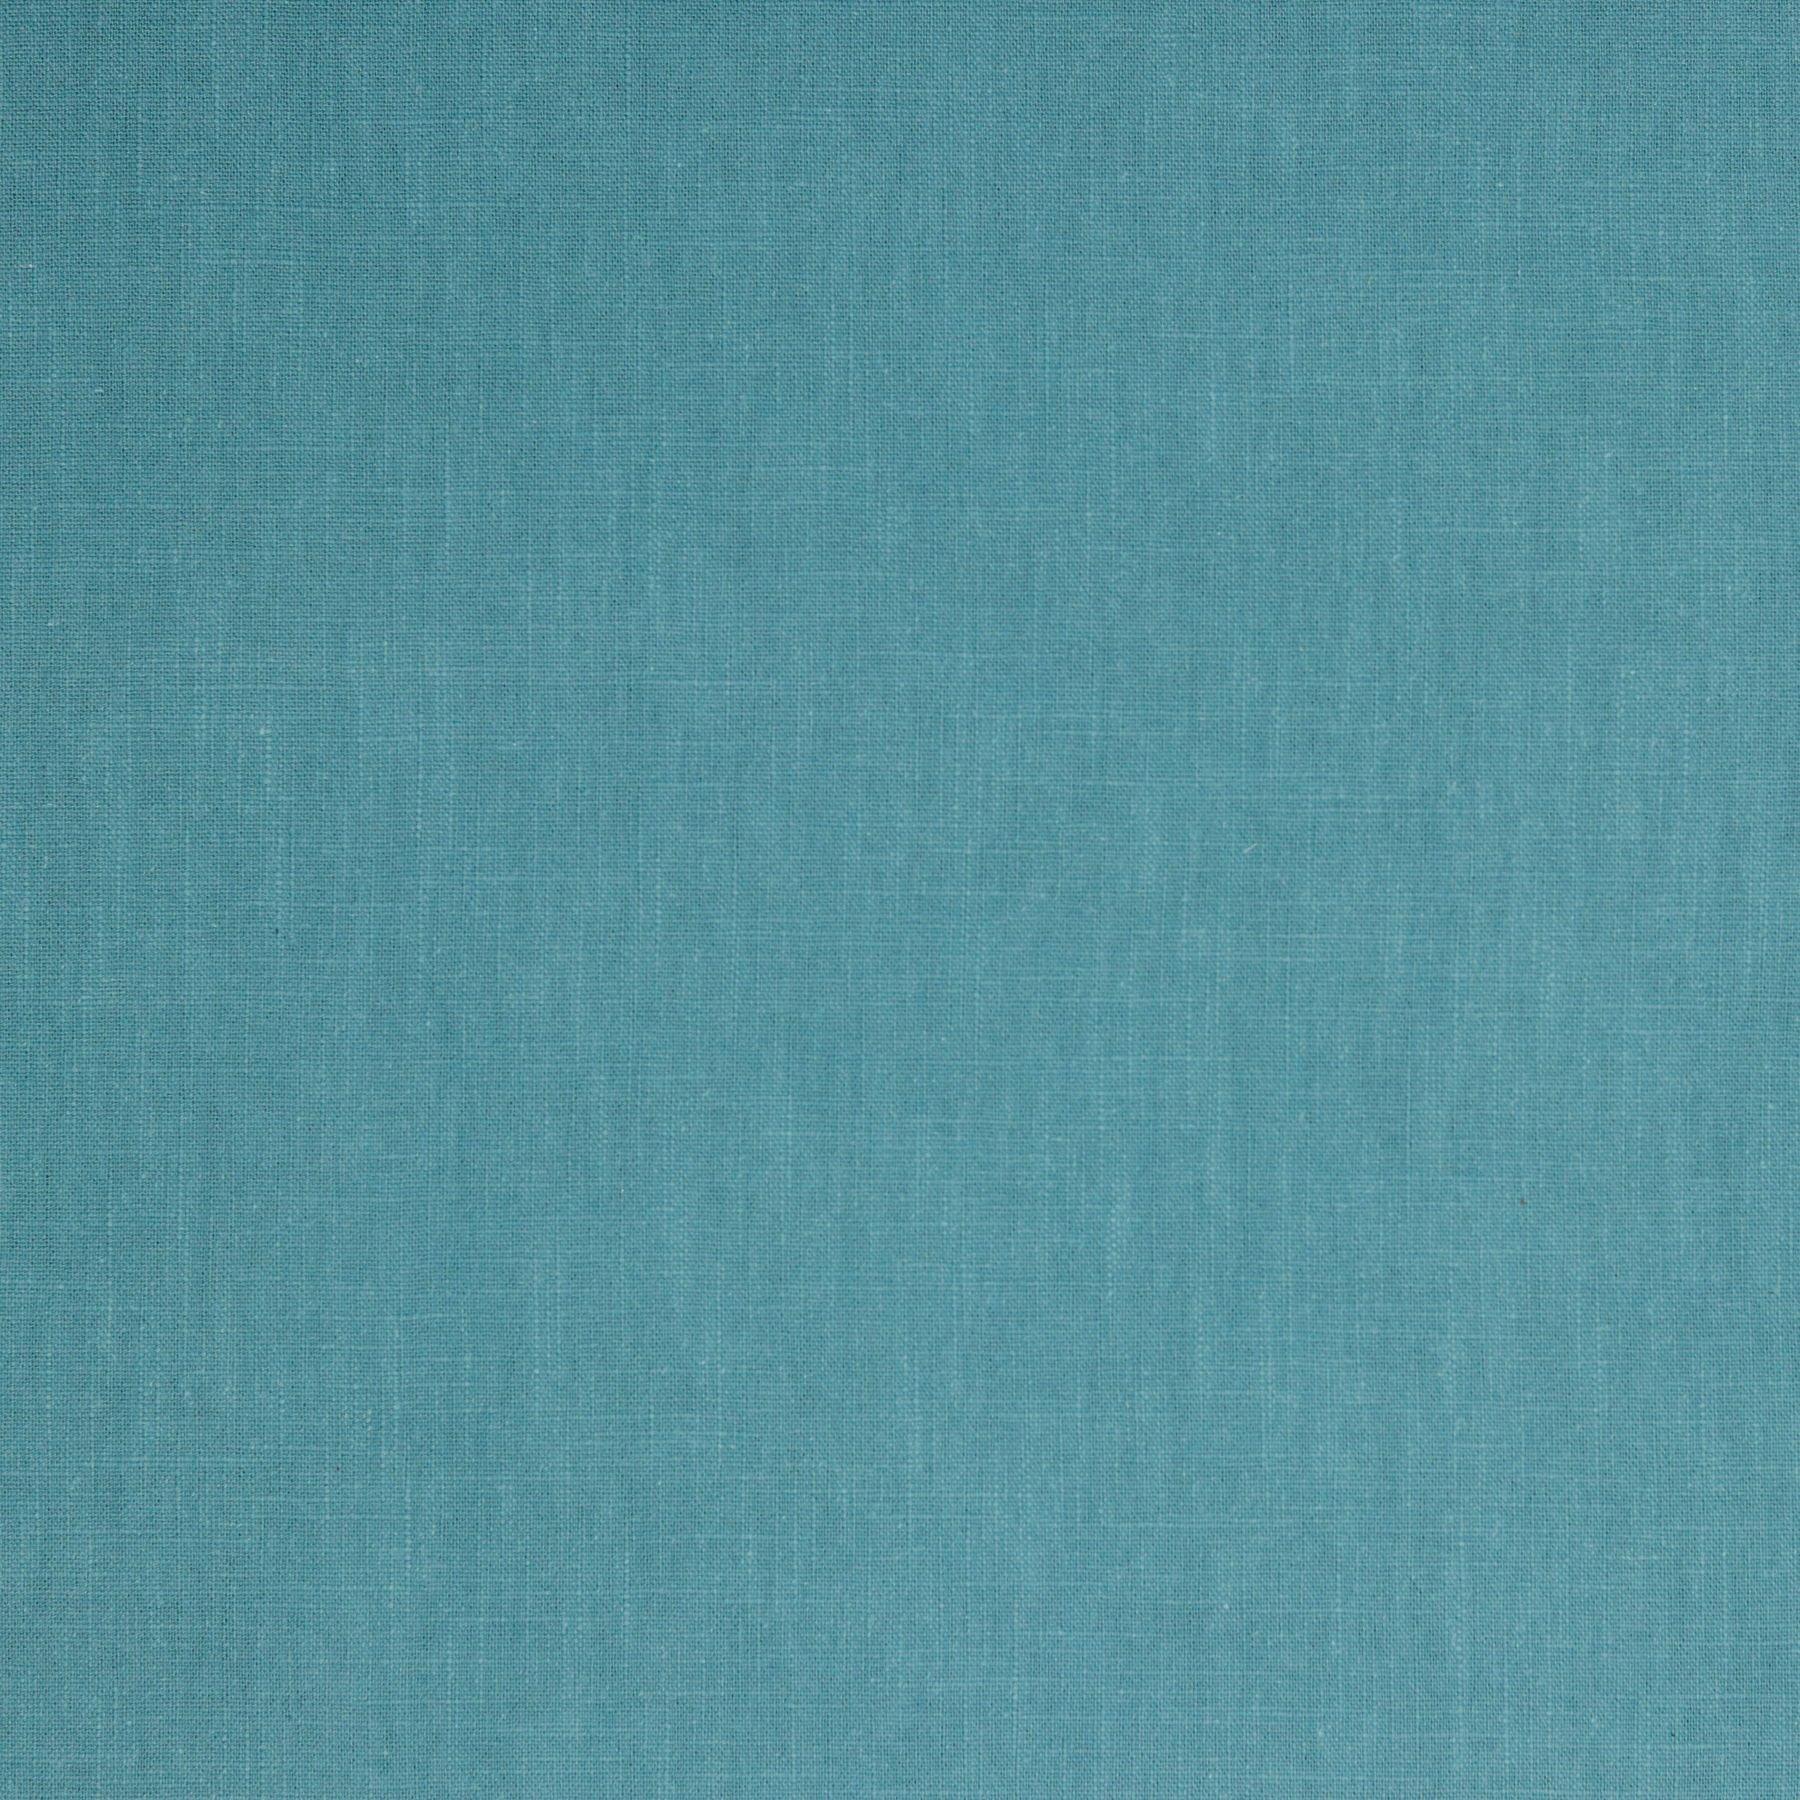 Tissu Lin bleu clair - Verotex - qualité - tendance - Prix bas